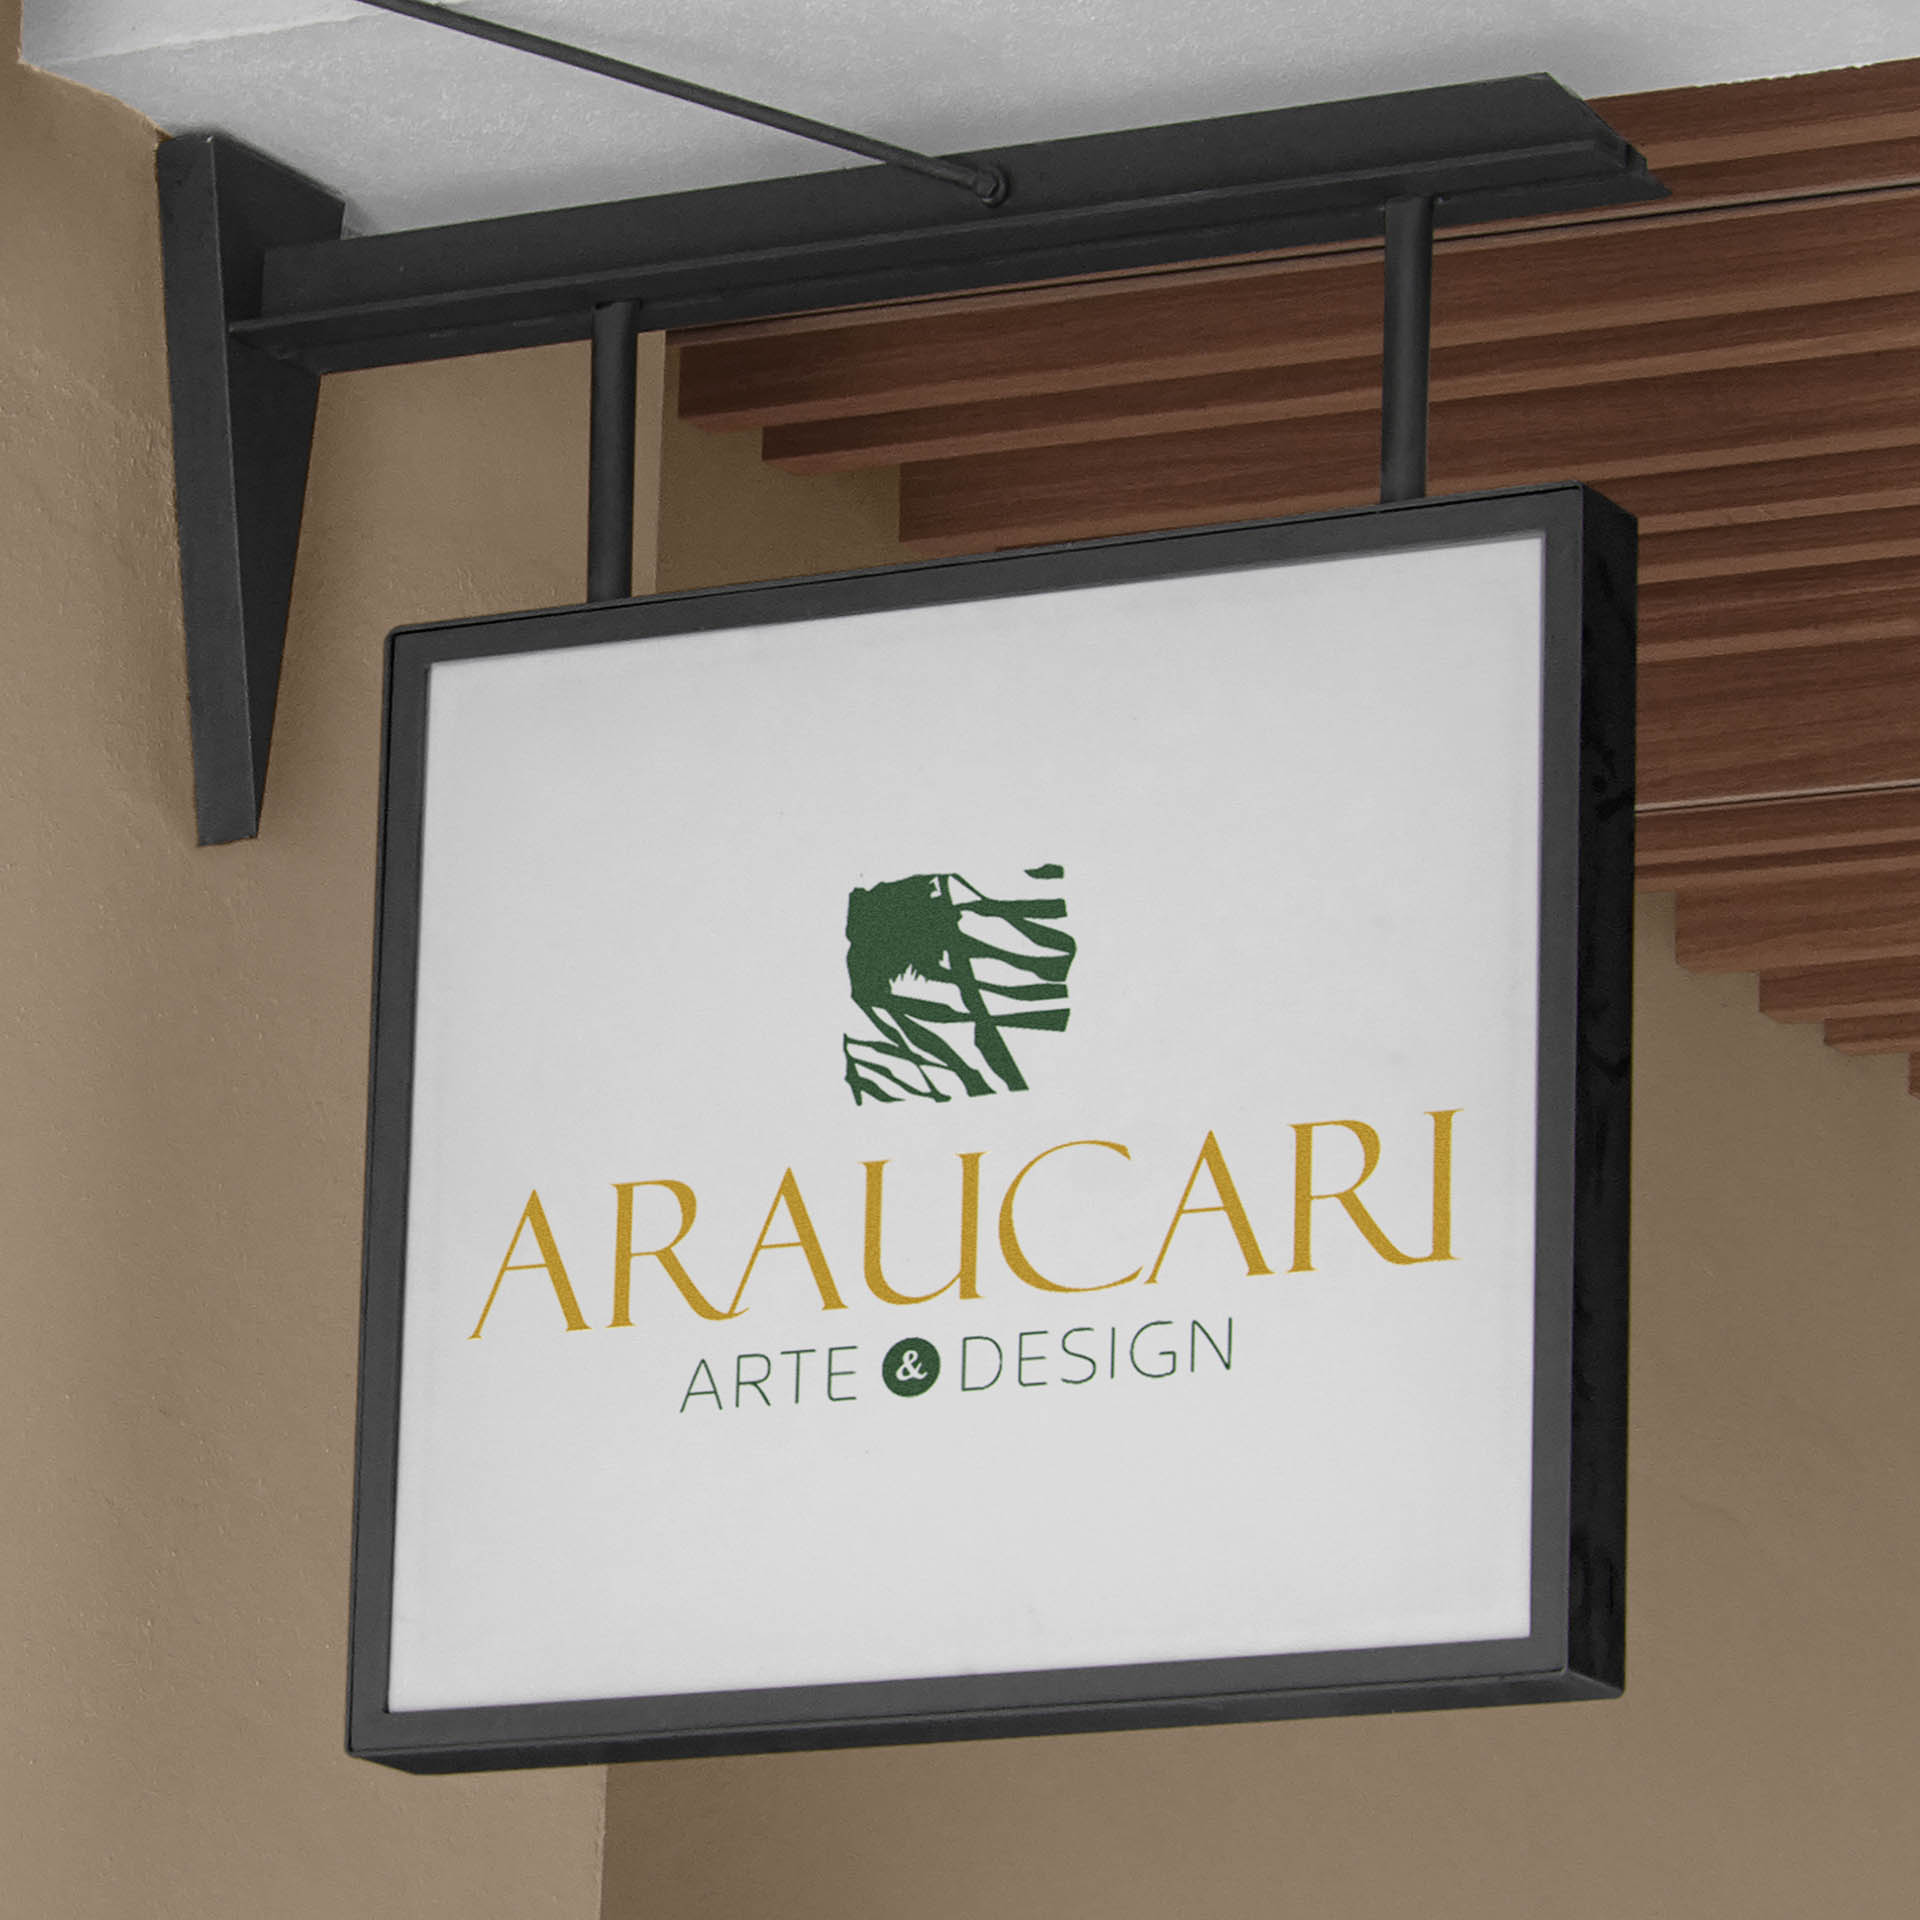 Araucari Arte